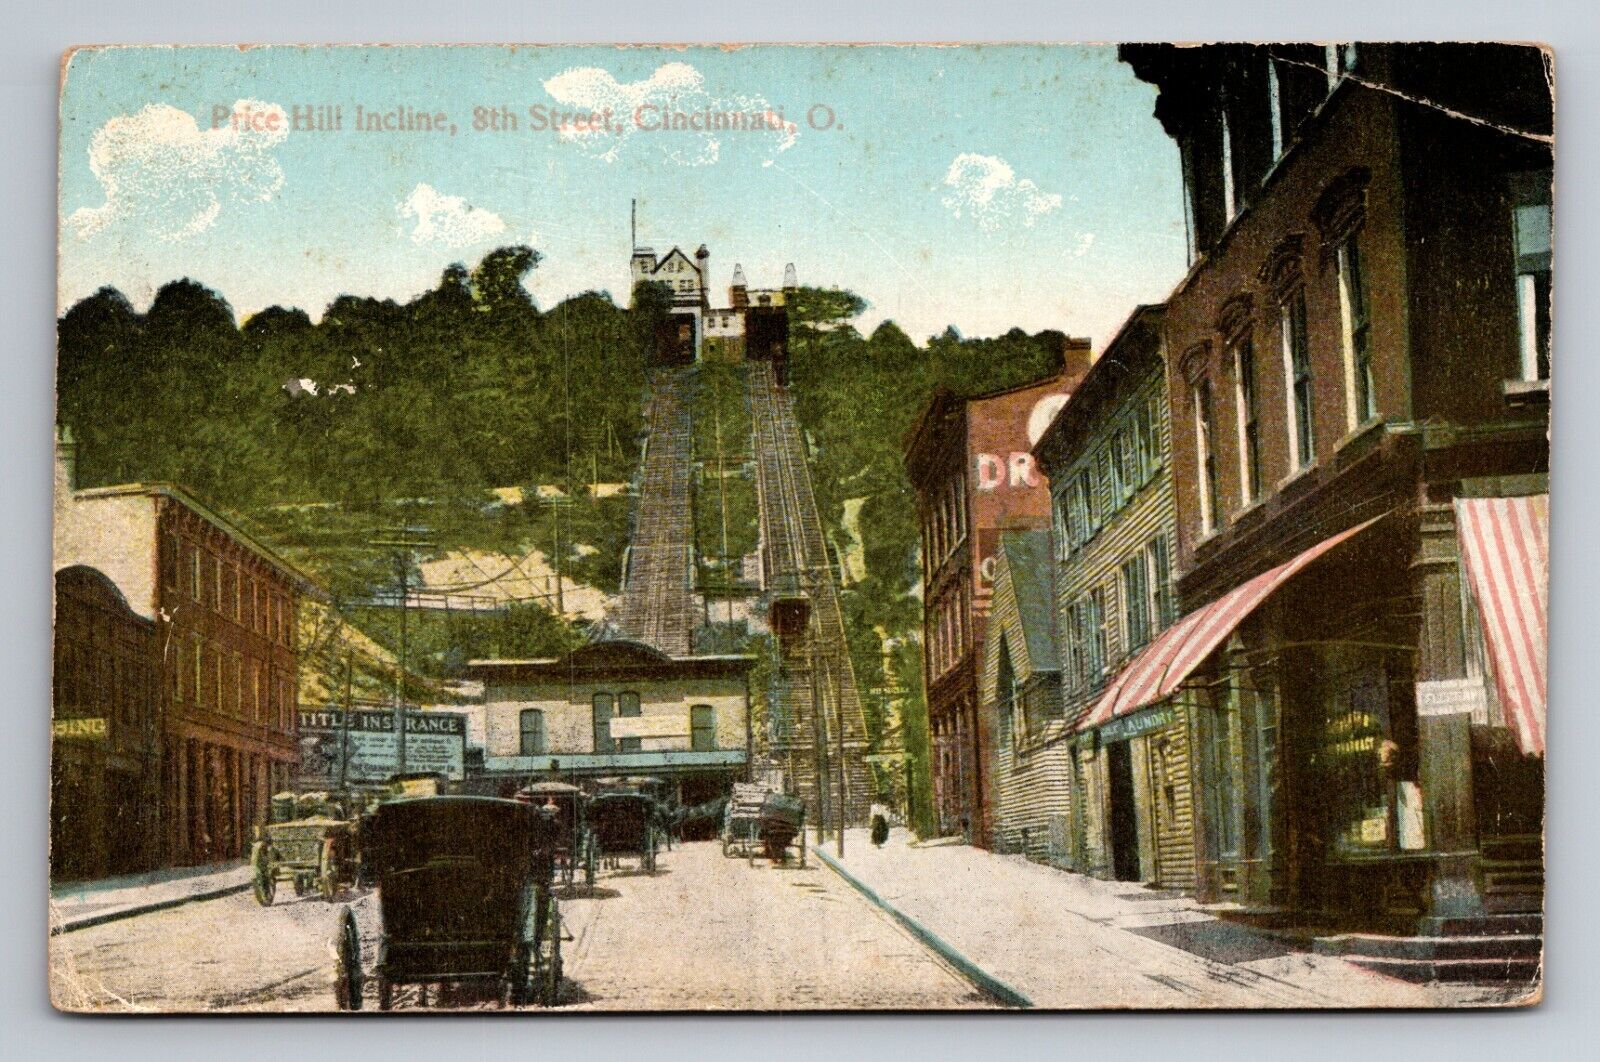 Price Hill Incline 8th Street Cincinnati Ohio Vintage Unposted Postcard